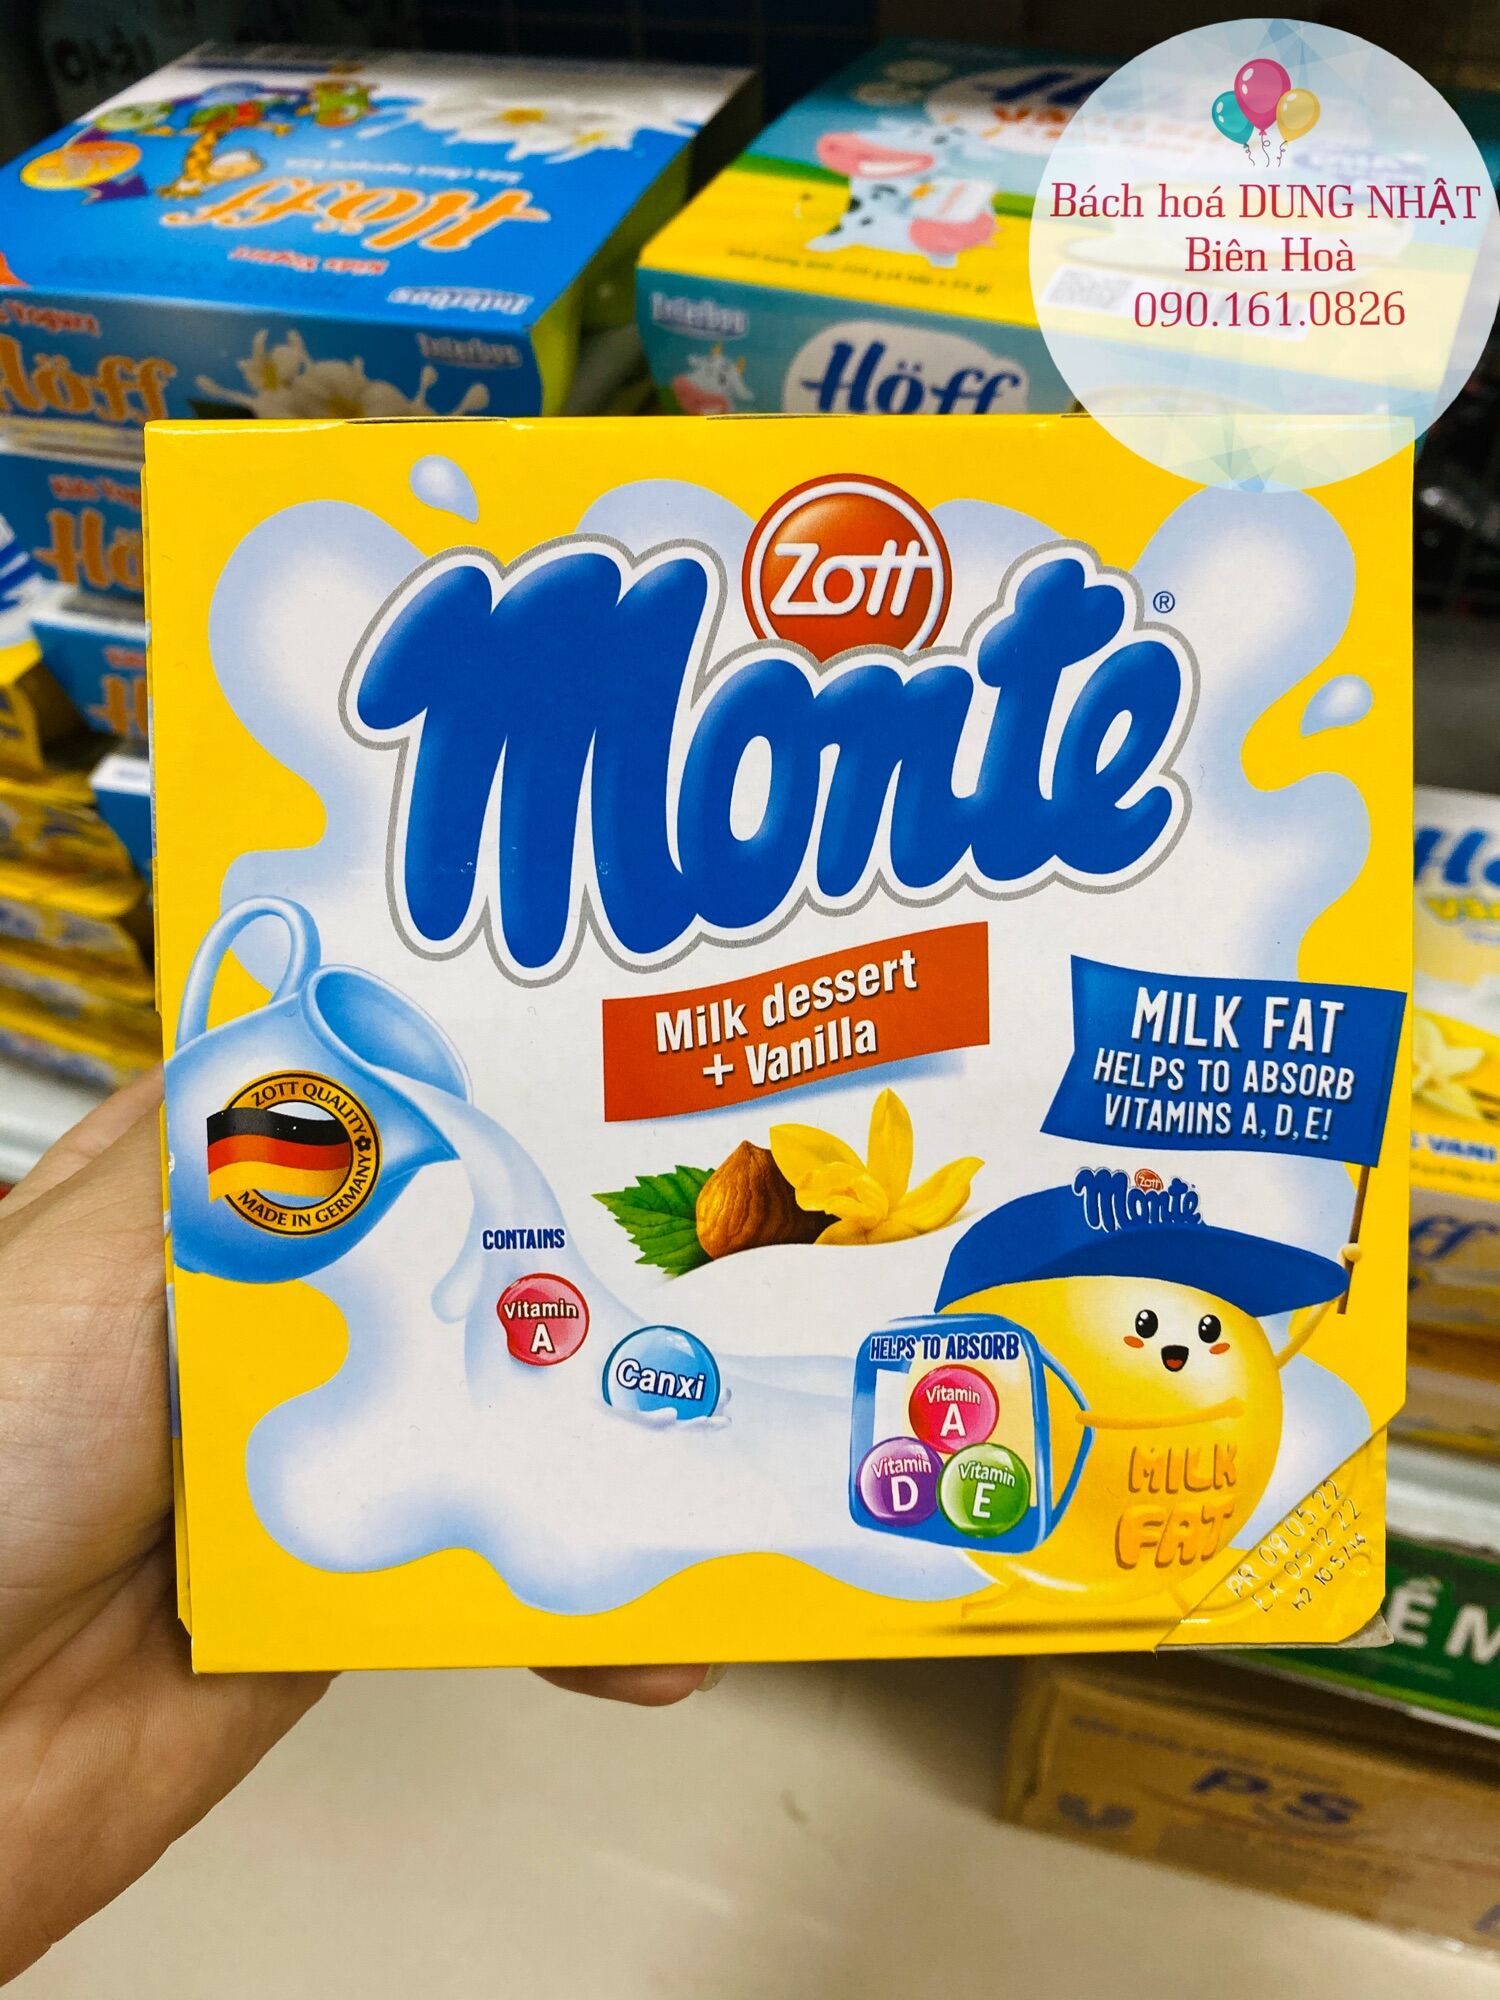 Váng sữa Zott Monte vị vani, socola  vỉ 4 hộp hsd 2023  Mua 2 vỉ tặng 1 xe